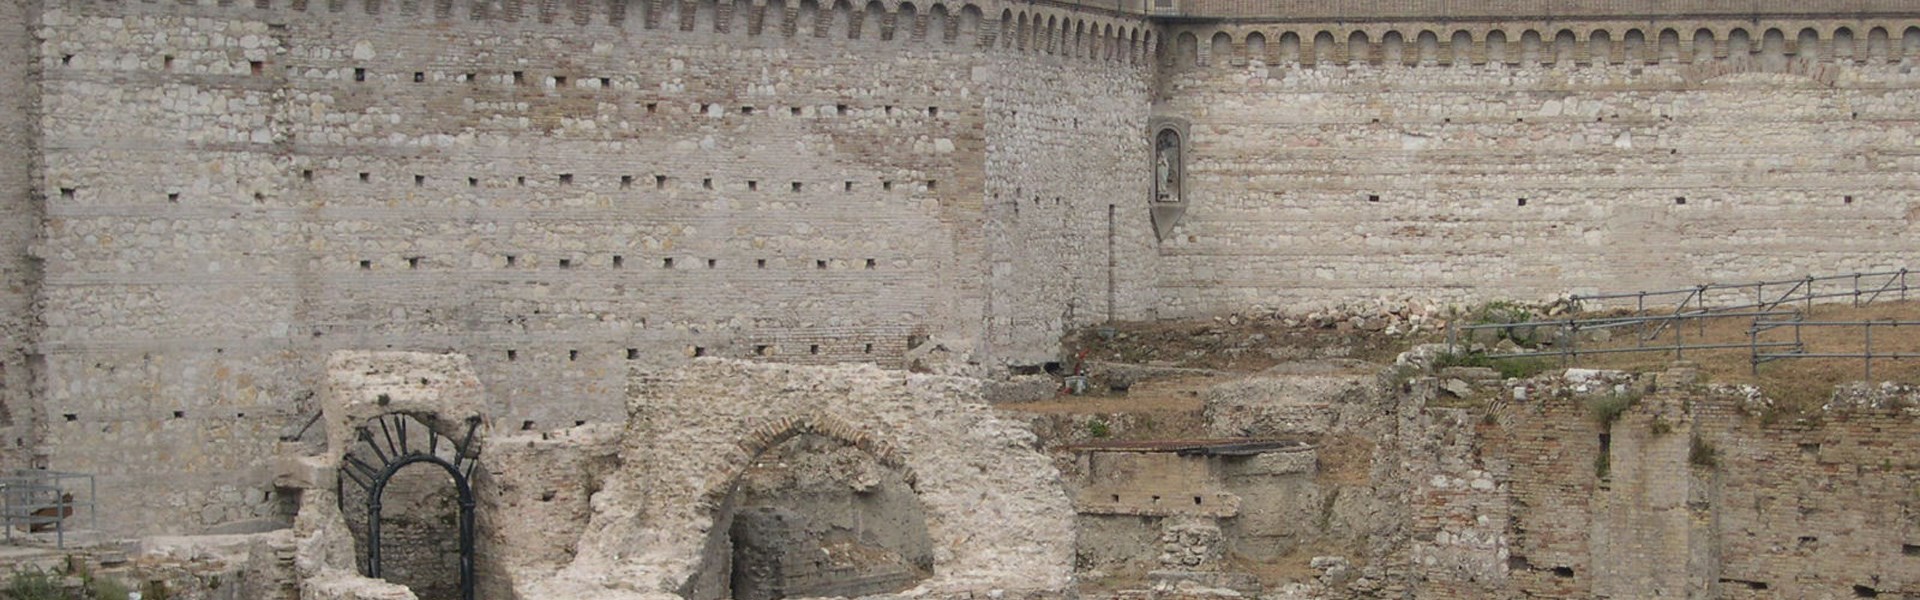 Ancona - Anfiteatro romano